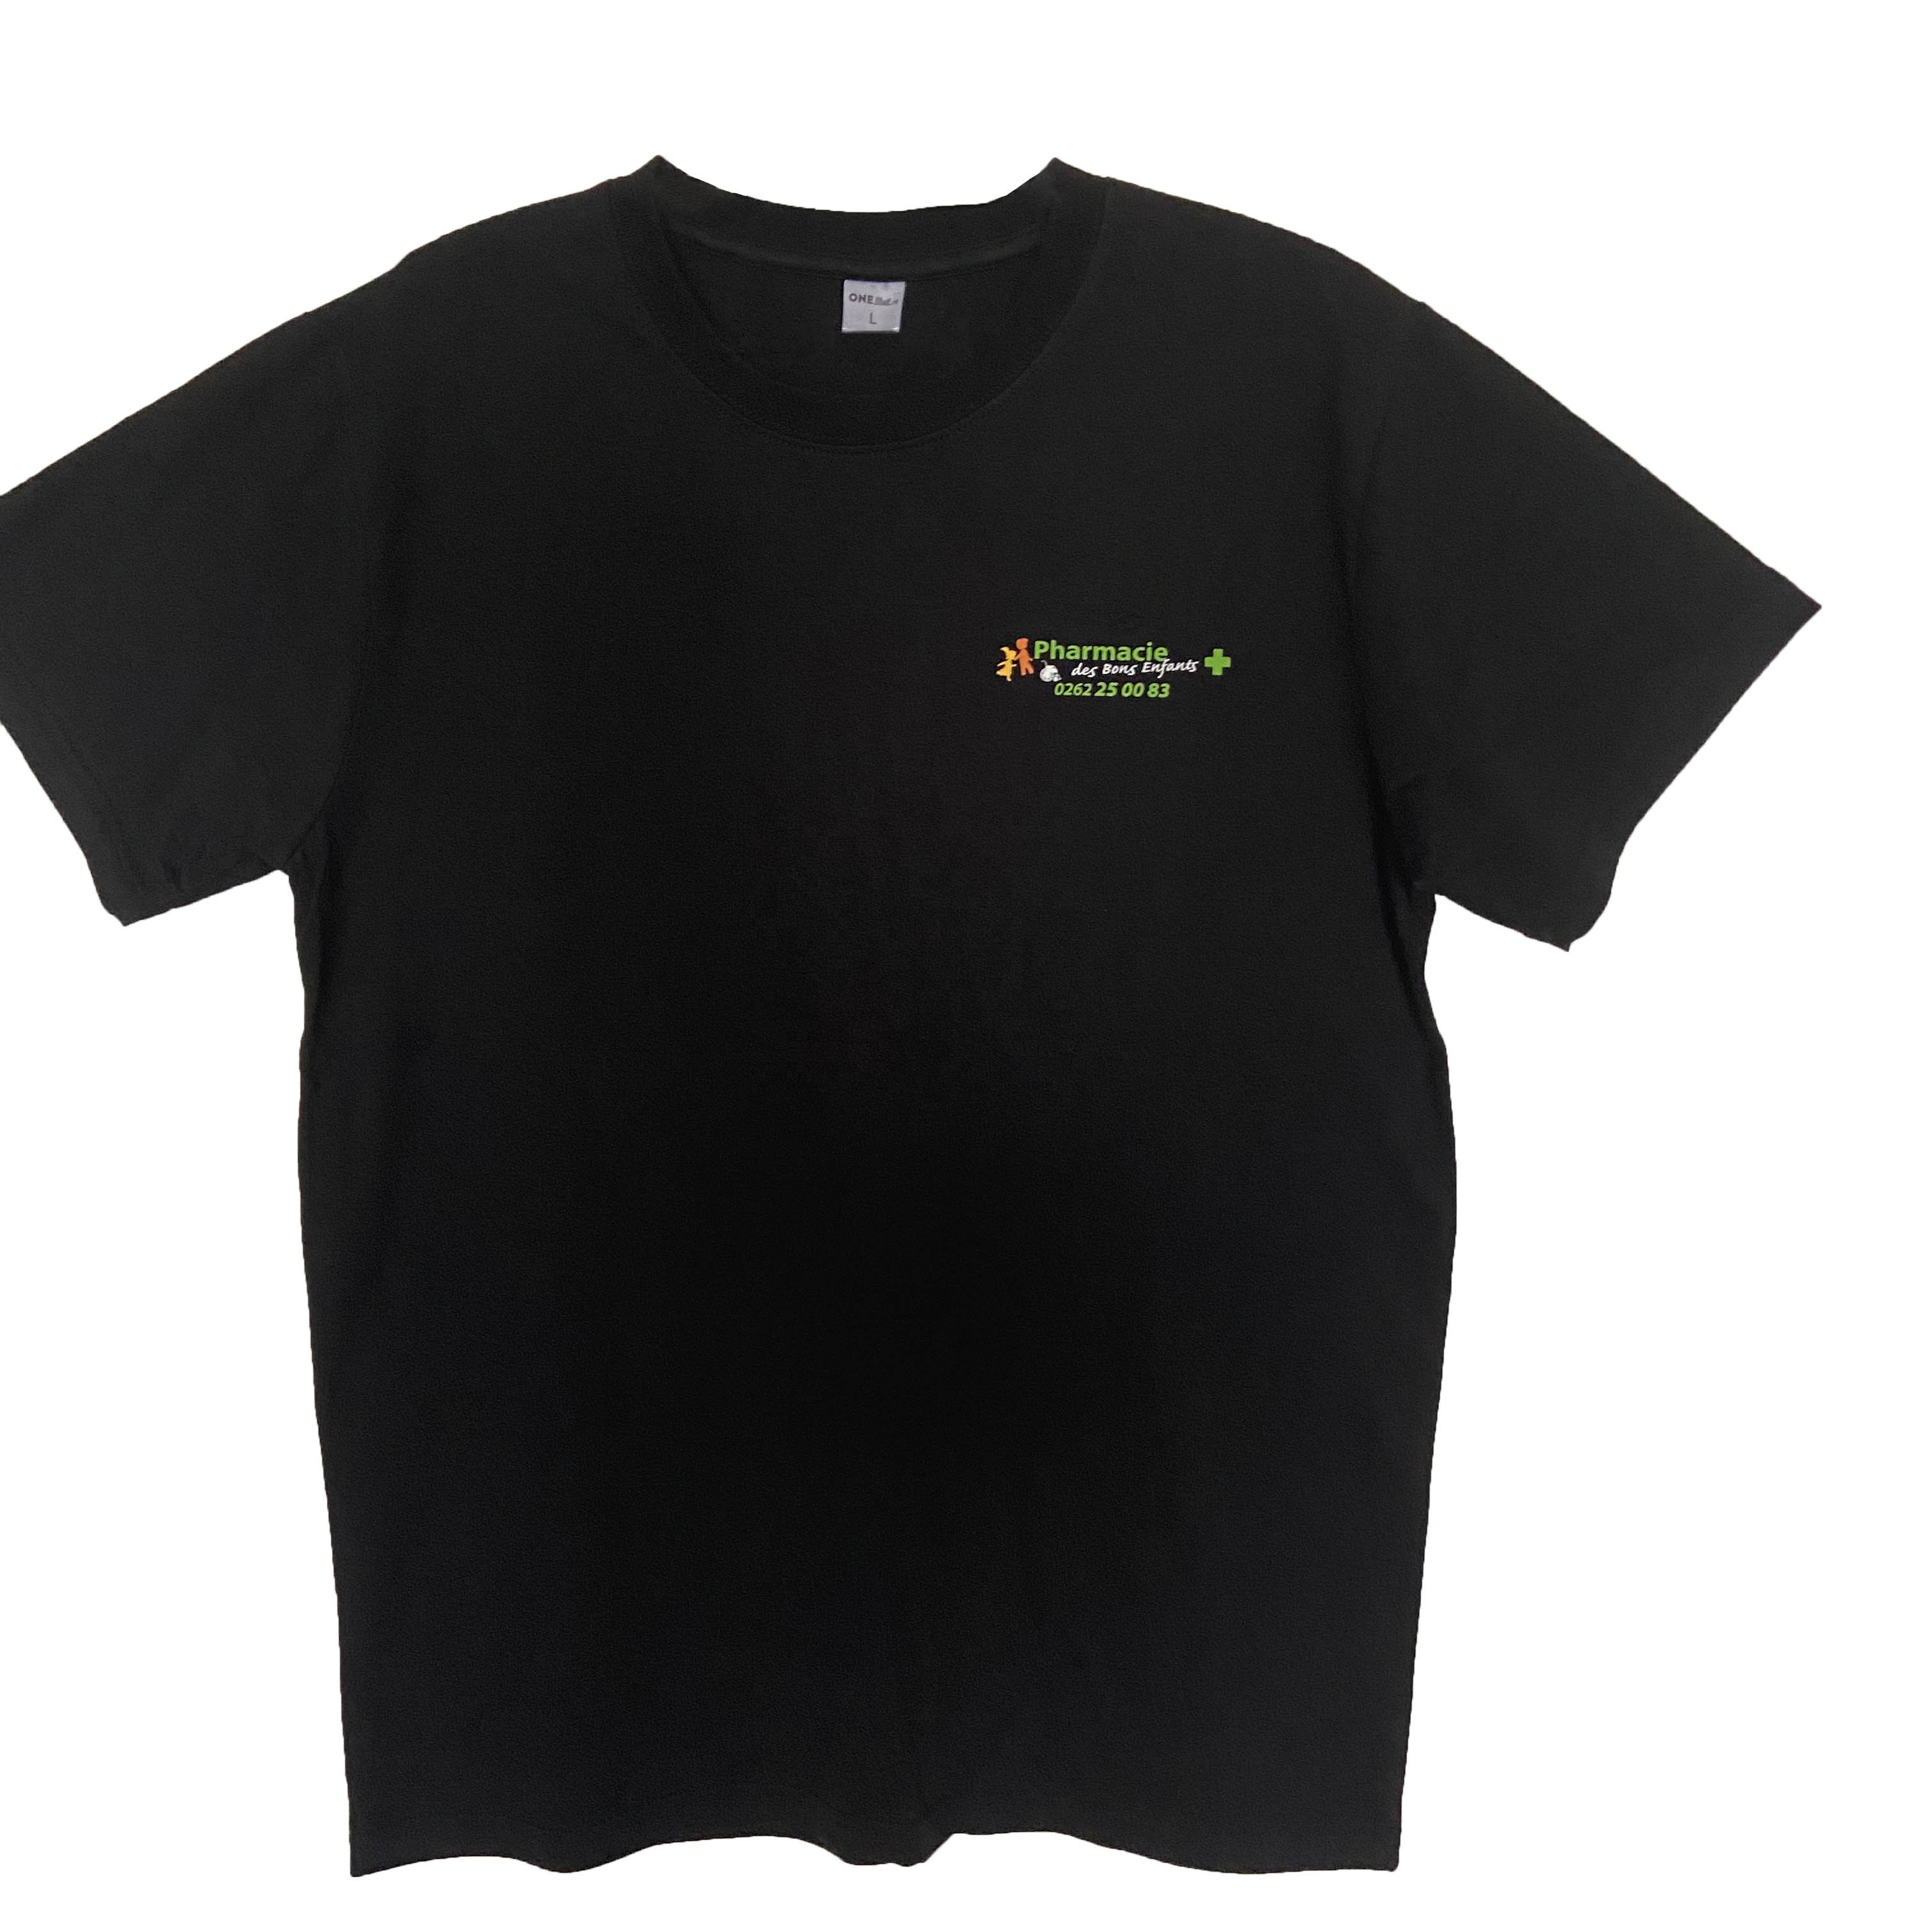 Wholesale unisex tubular screen print t-shirt oem graphic logo 100 cotton heavyweight printed tshirts for men and woman